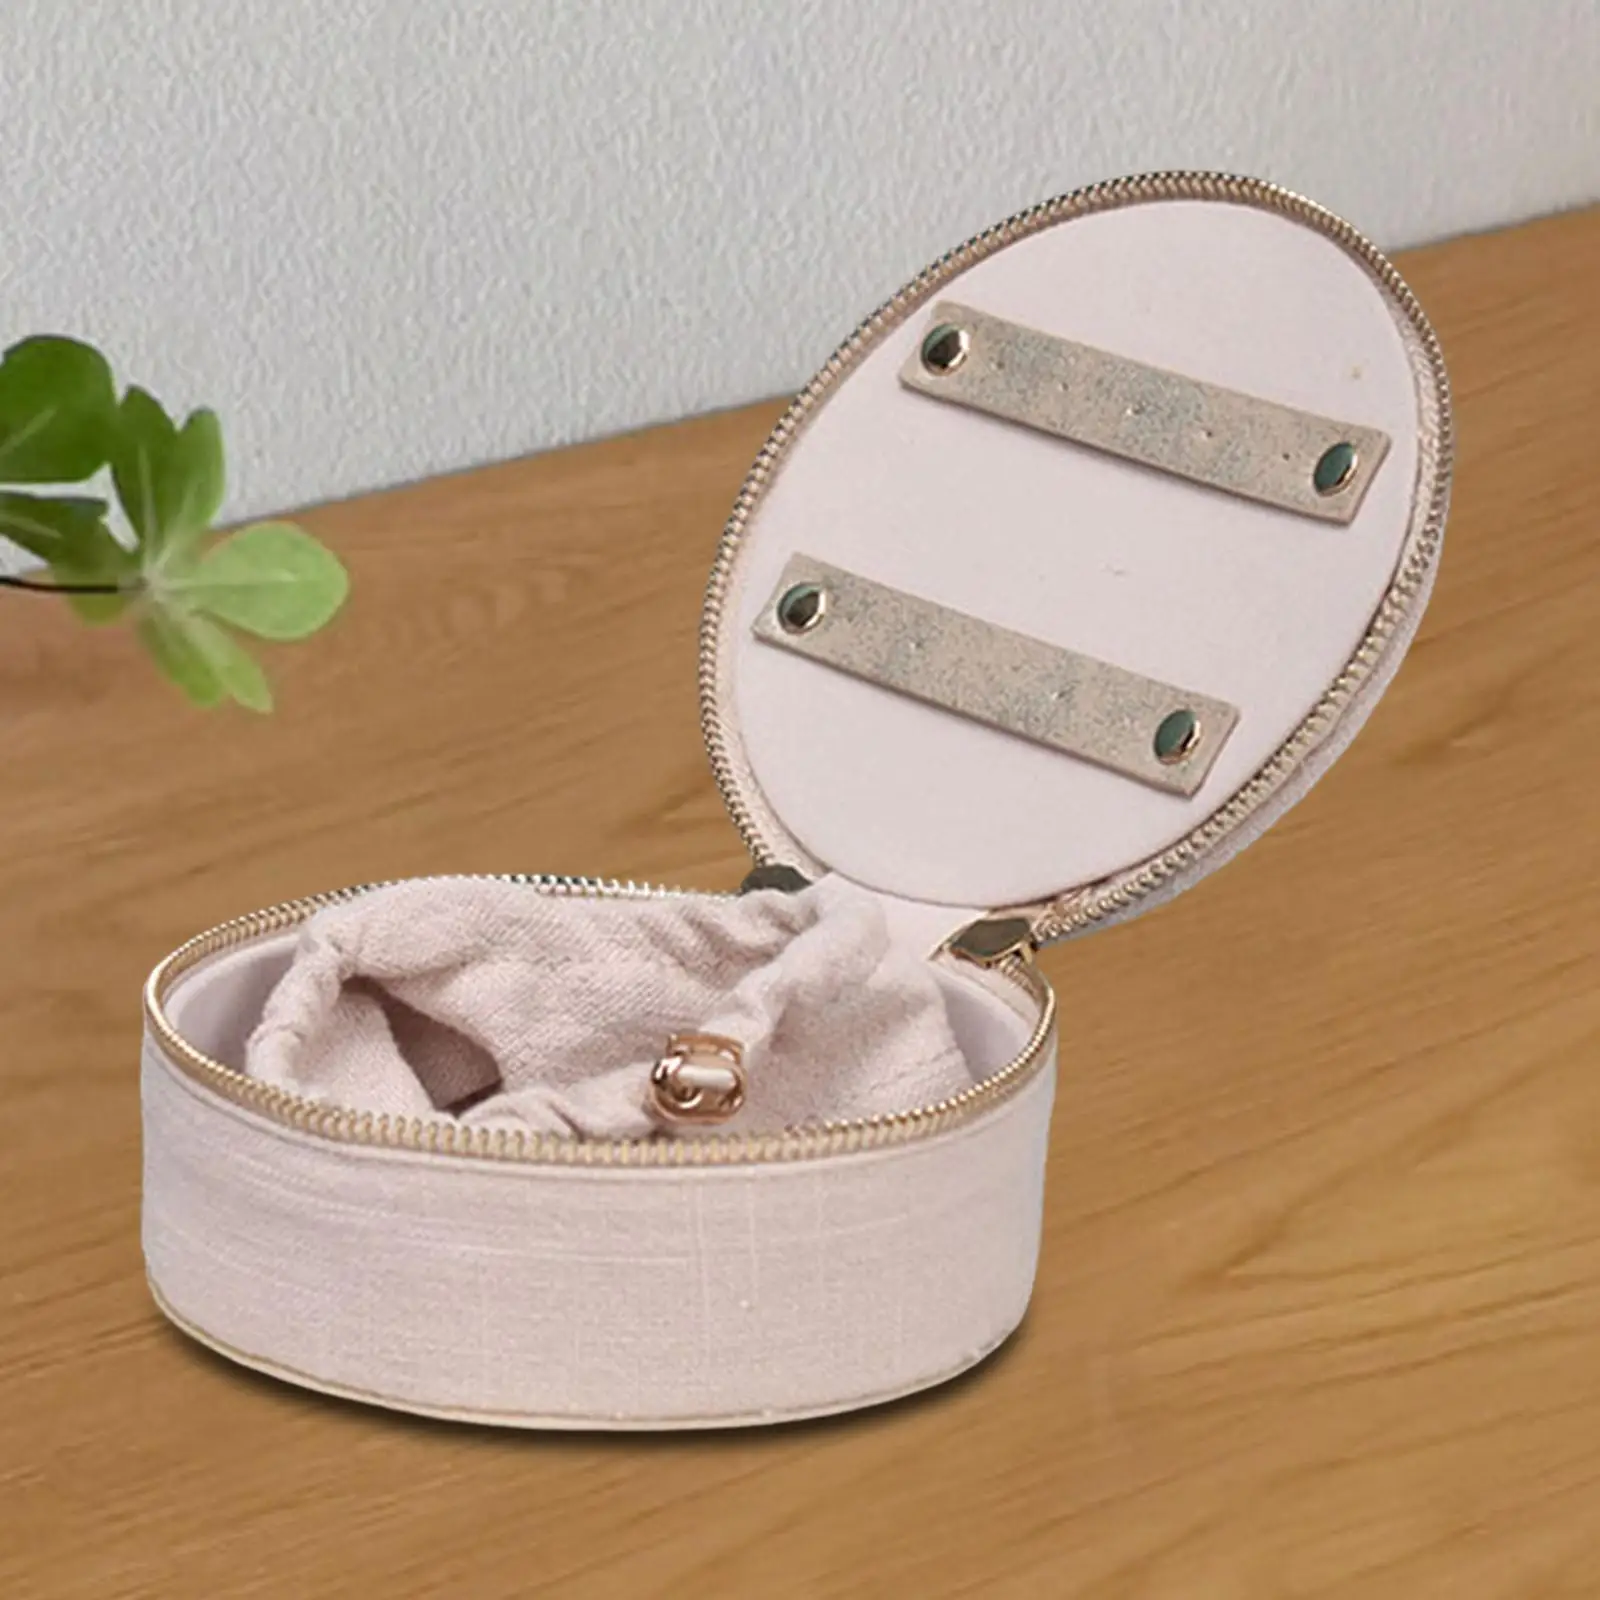 Portable Box Small Display Holder for Ear Studs Bracelets Girlfriend